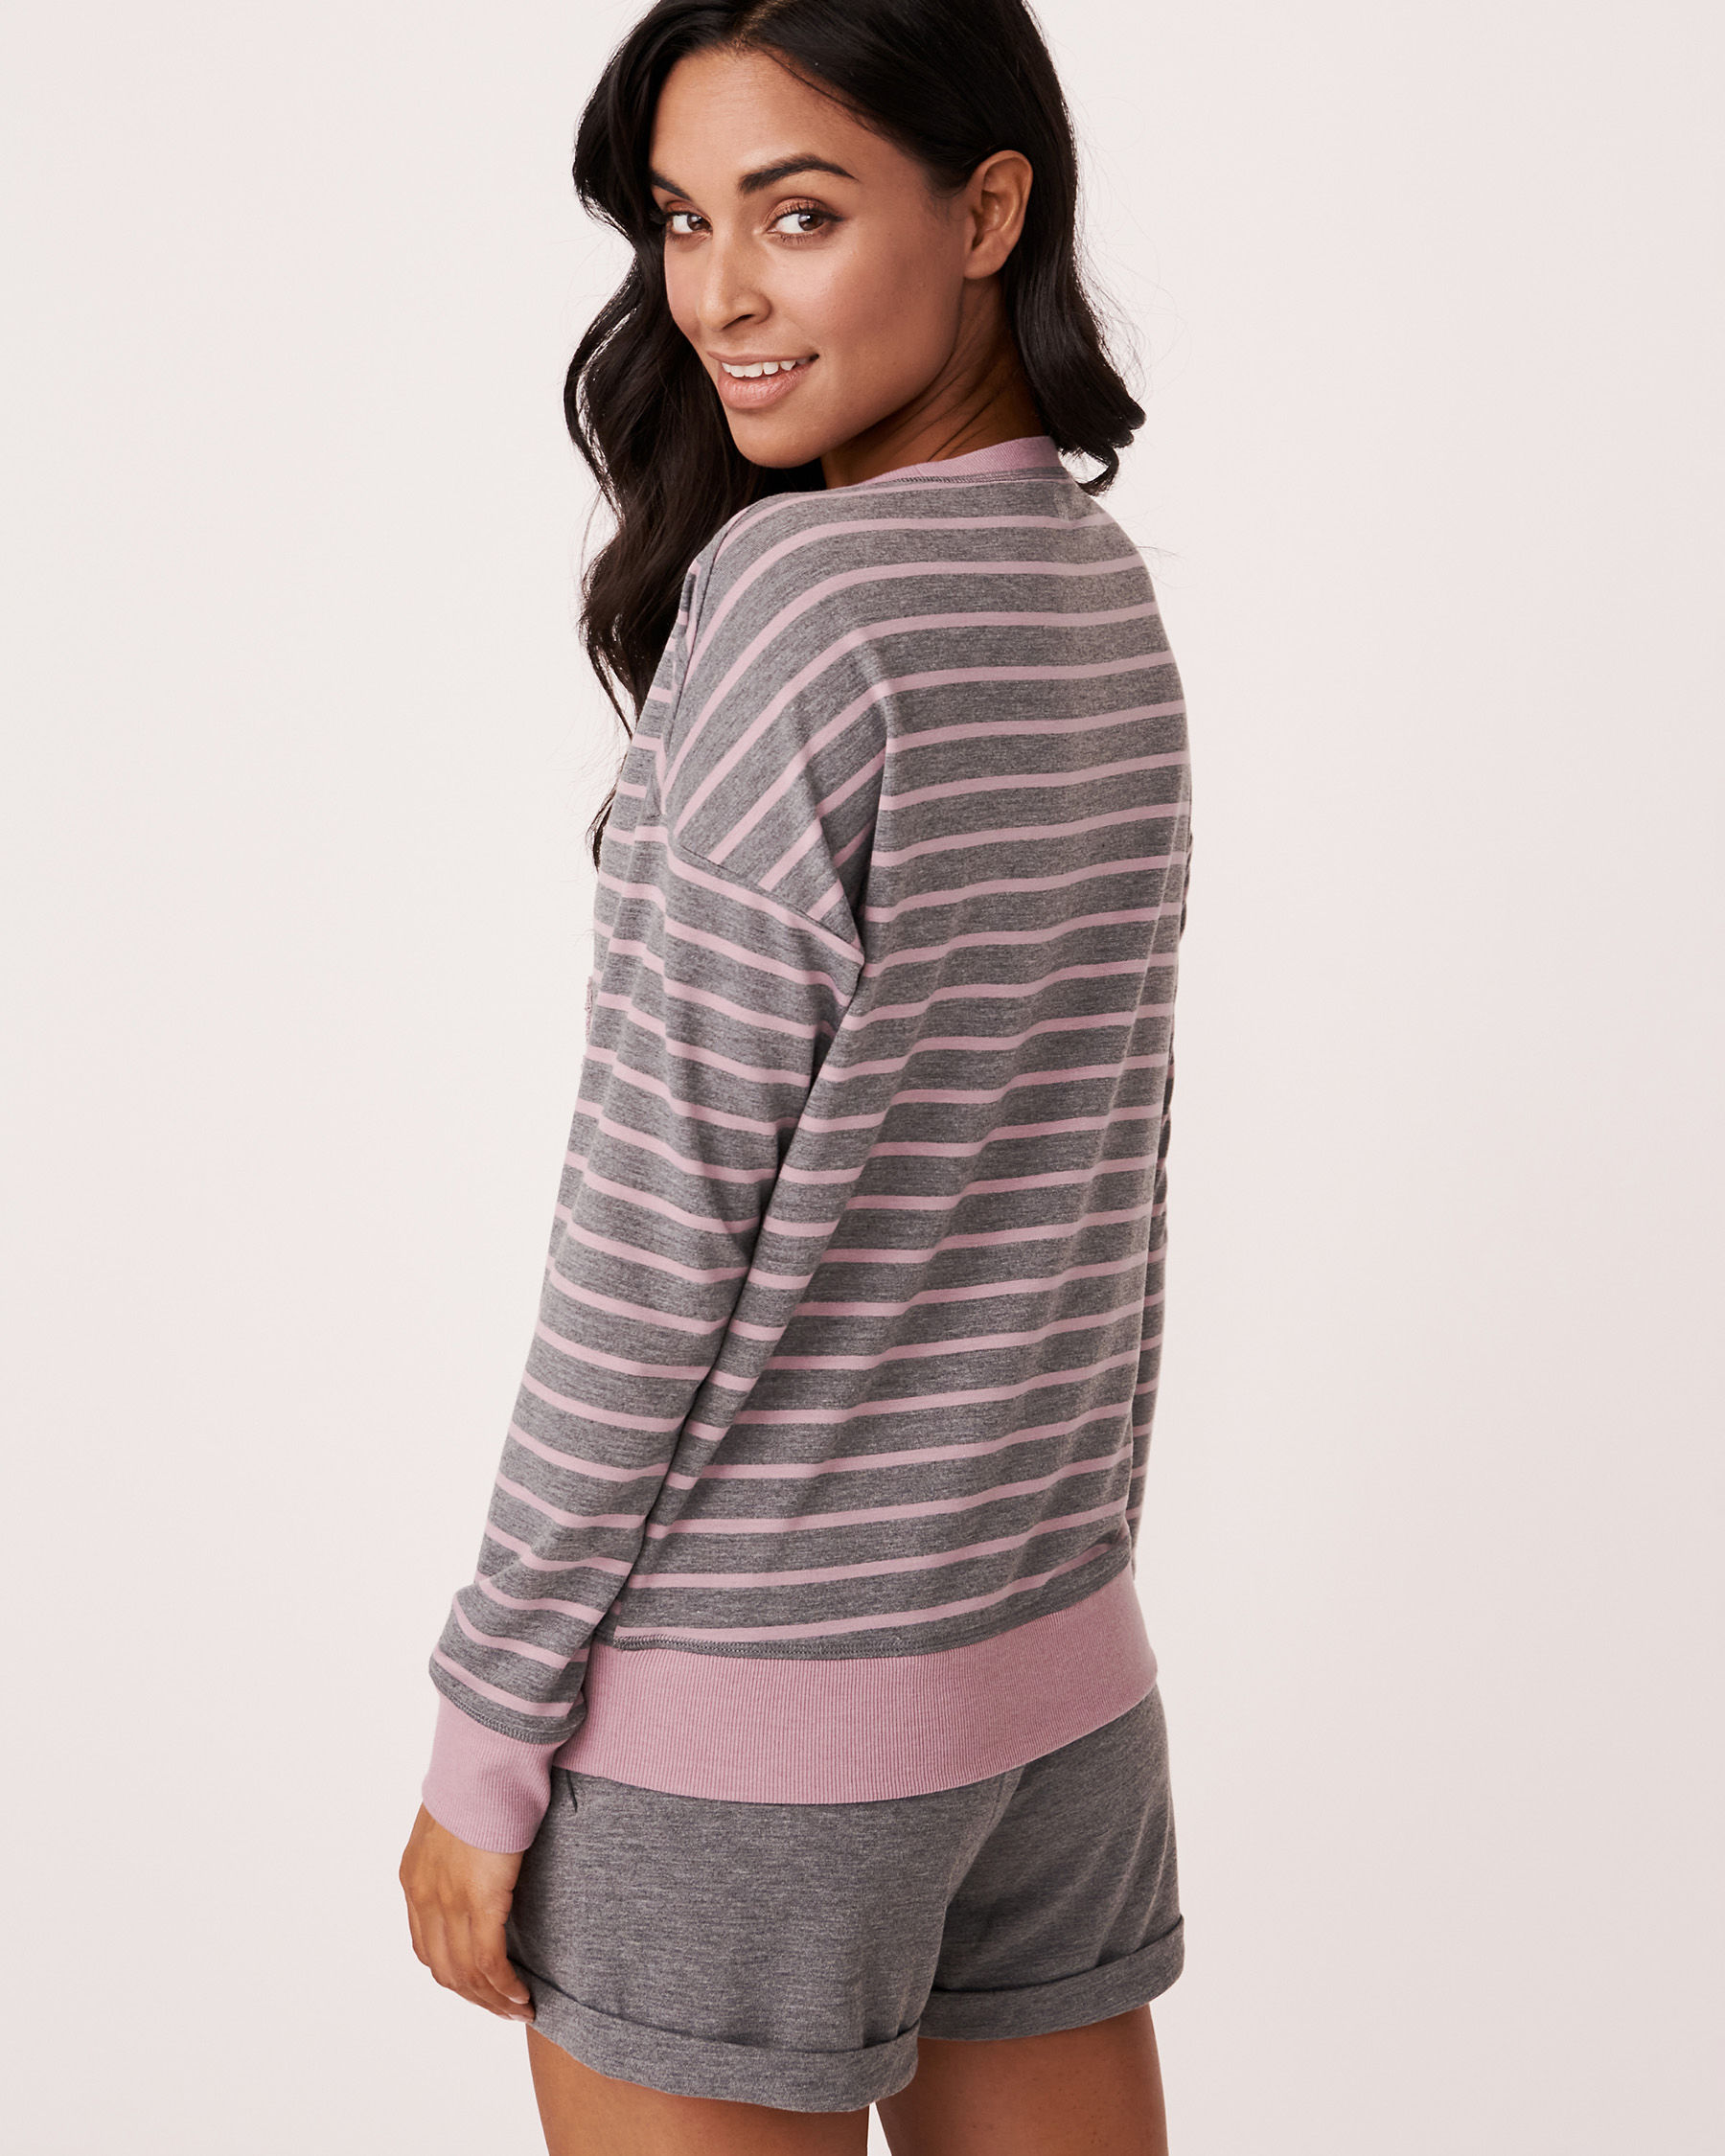 LA VIE EN ROSE Textured Long Sleeve Shirt Grey and pink mix 768-373-1-11 - View2